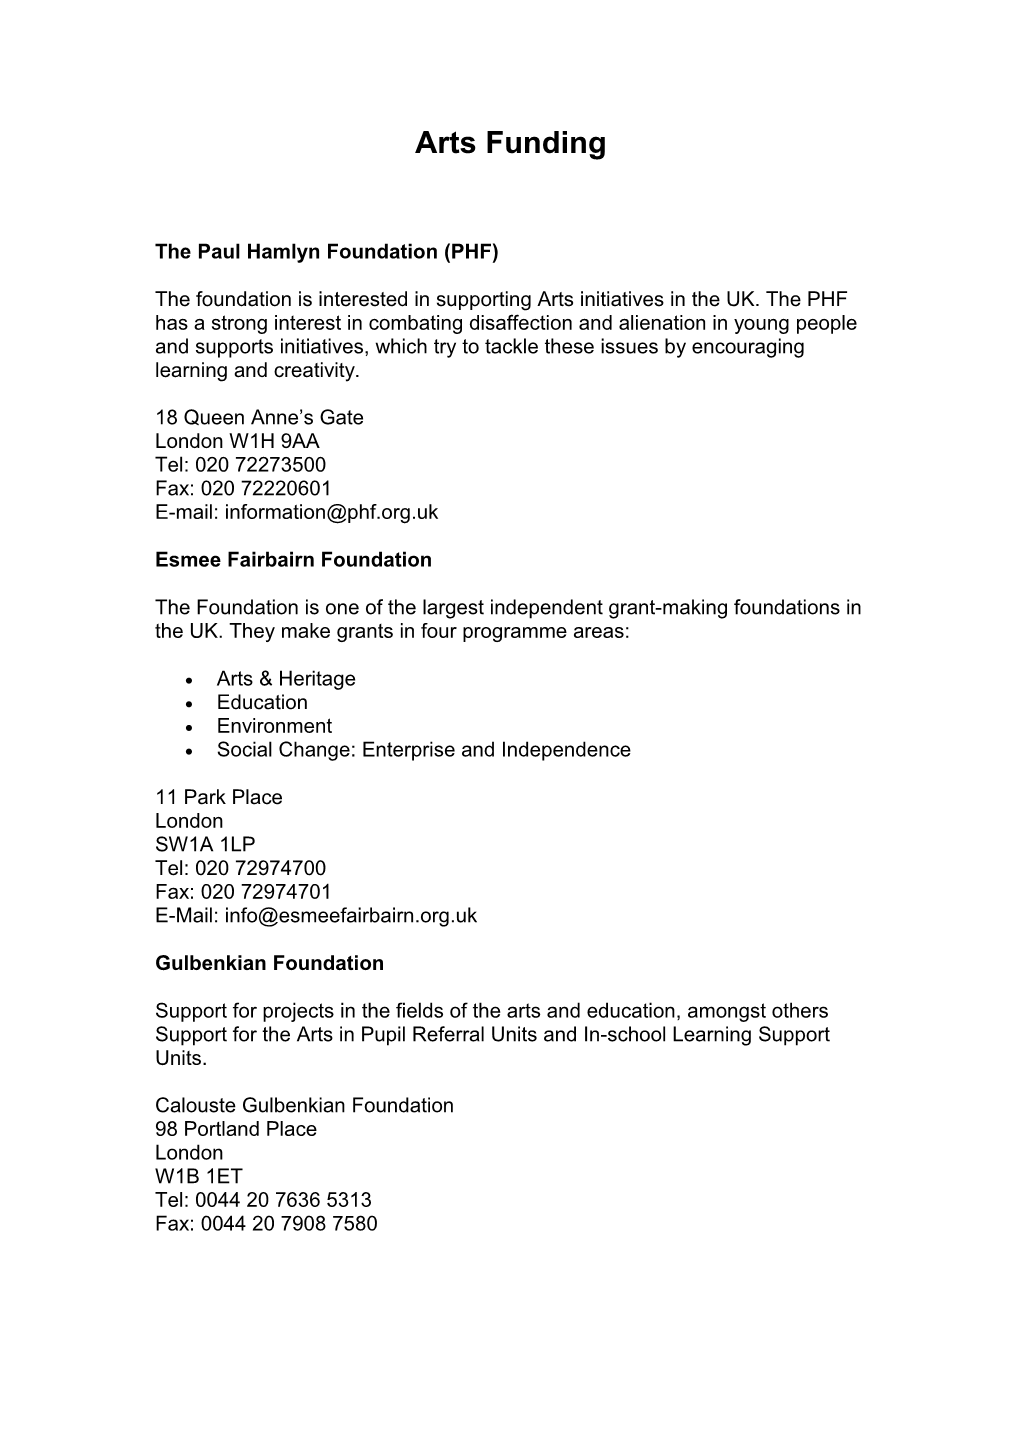 The Paul Hamlyn Foundation (PHF)